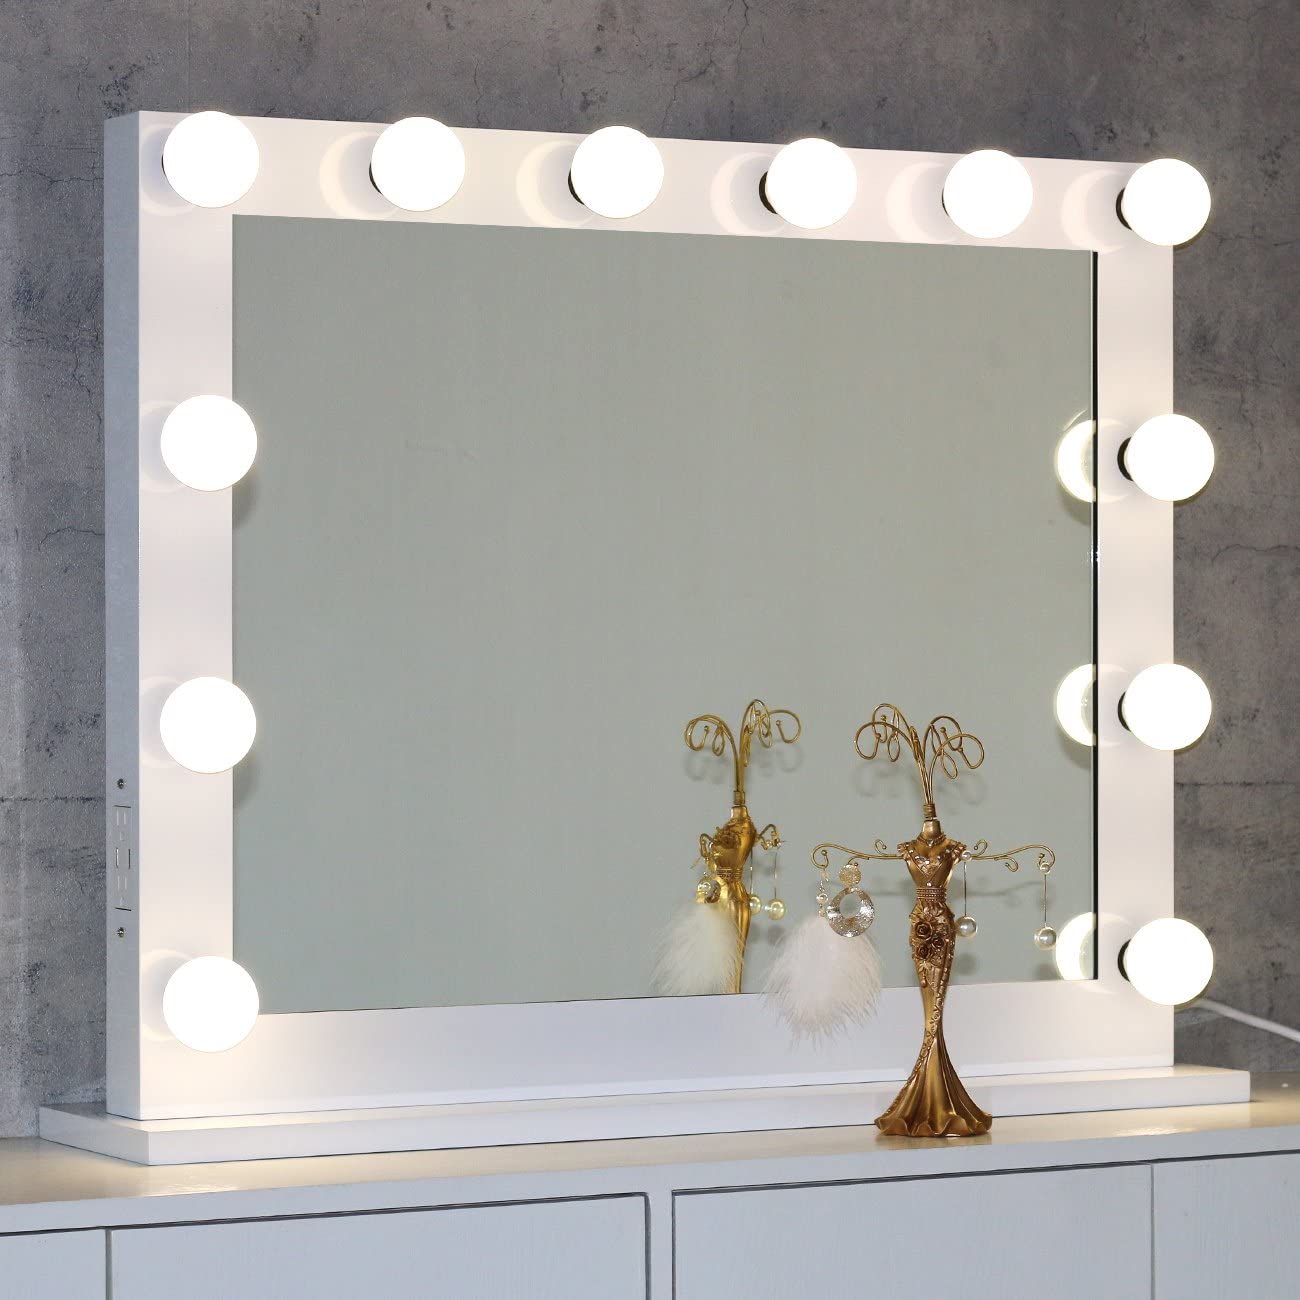 Top 7 Best Light Up Vanity Mirrors, Best Lighted Mirror For Vanity